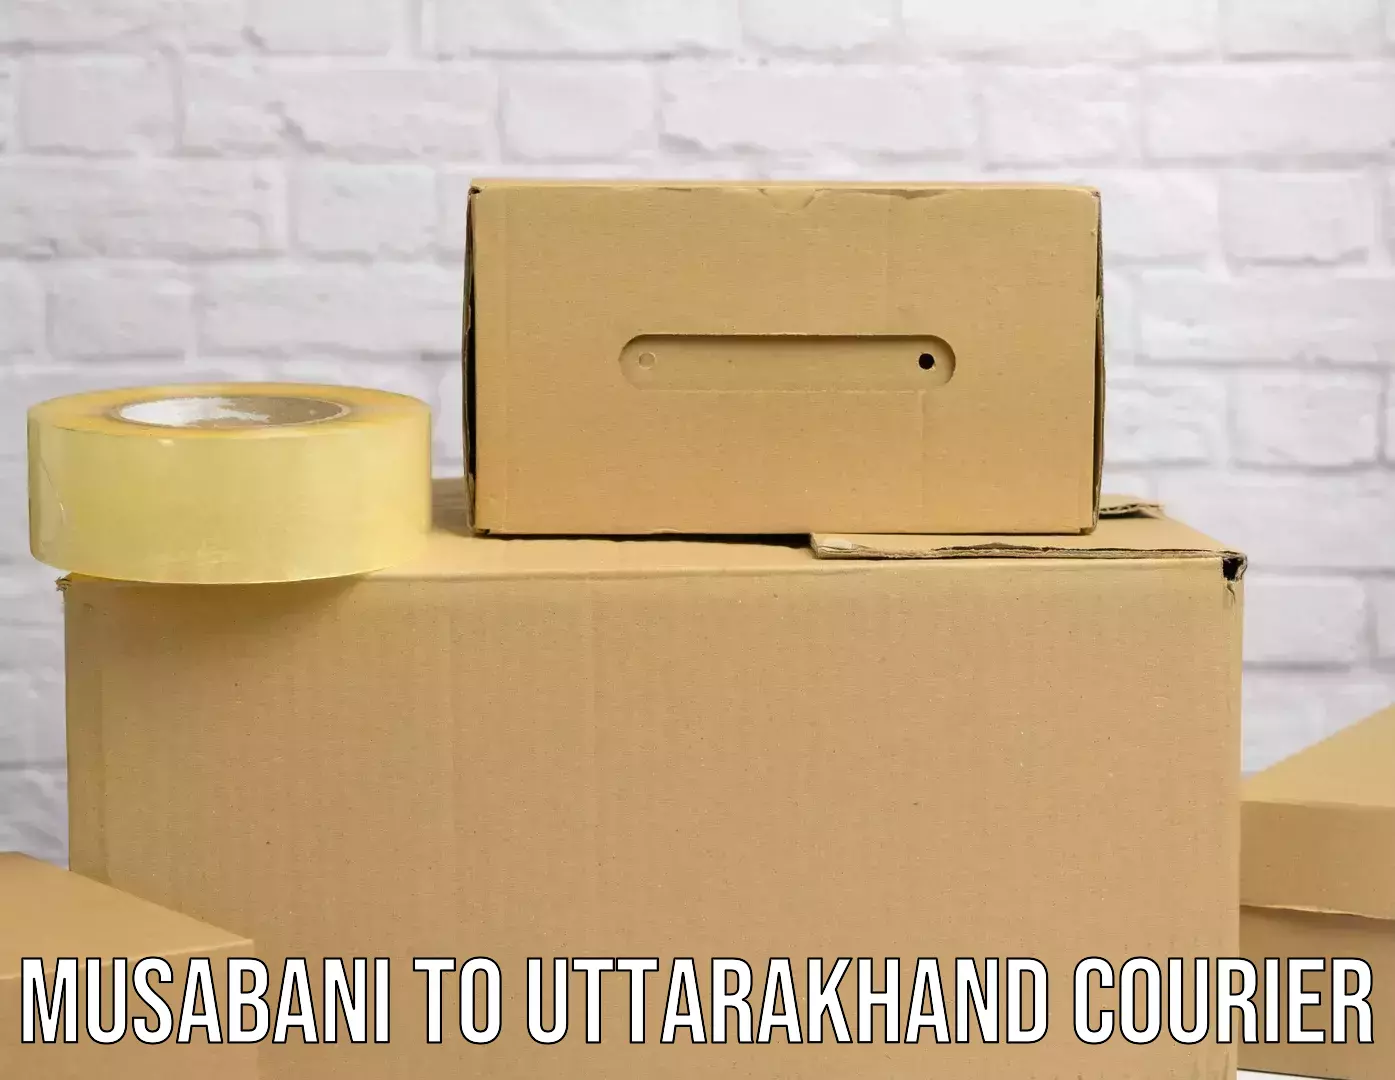 State-of-the-art courier technology Musabani to Uttarakhand